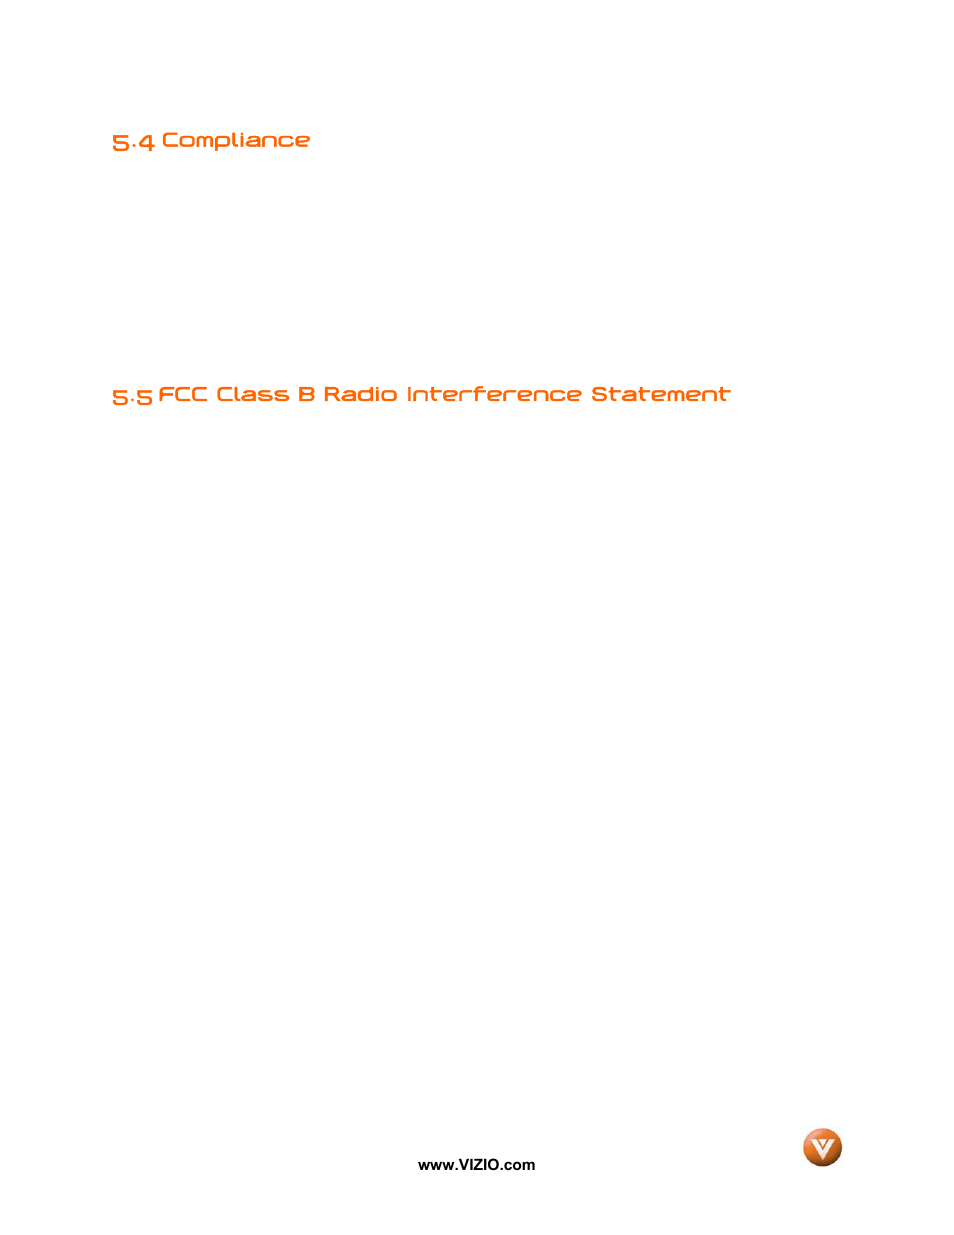 4 compliance, 5 fcc class b radio interference statement, Compliance | Vizio VP42 User Manual | Page 53 / 57